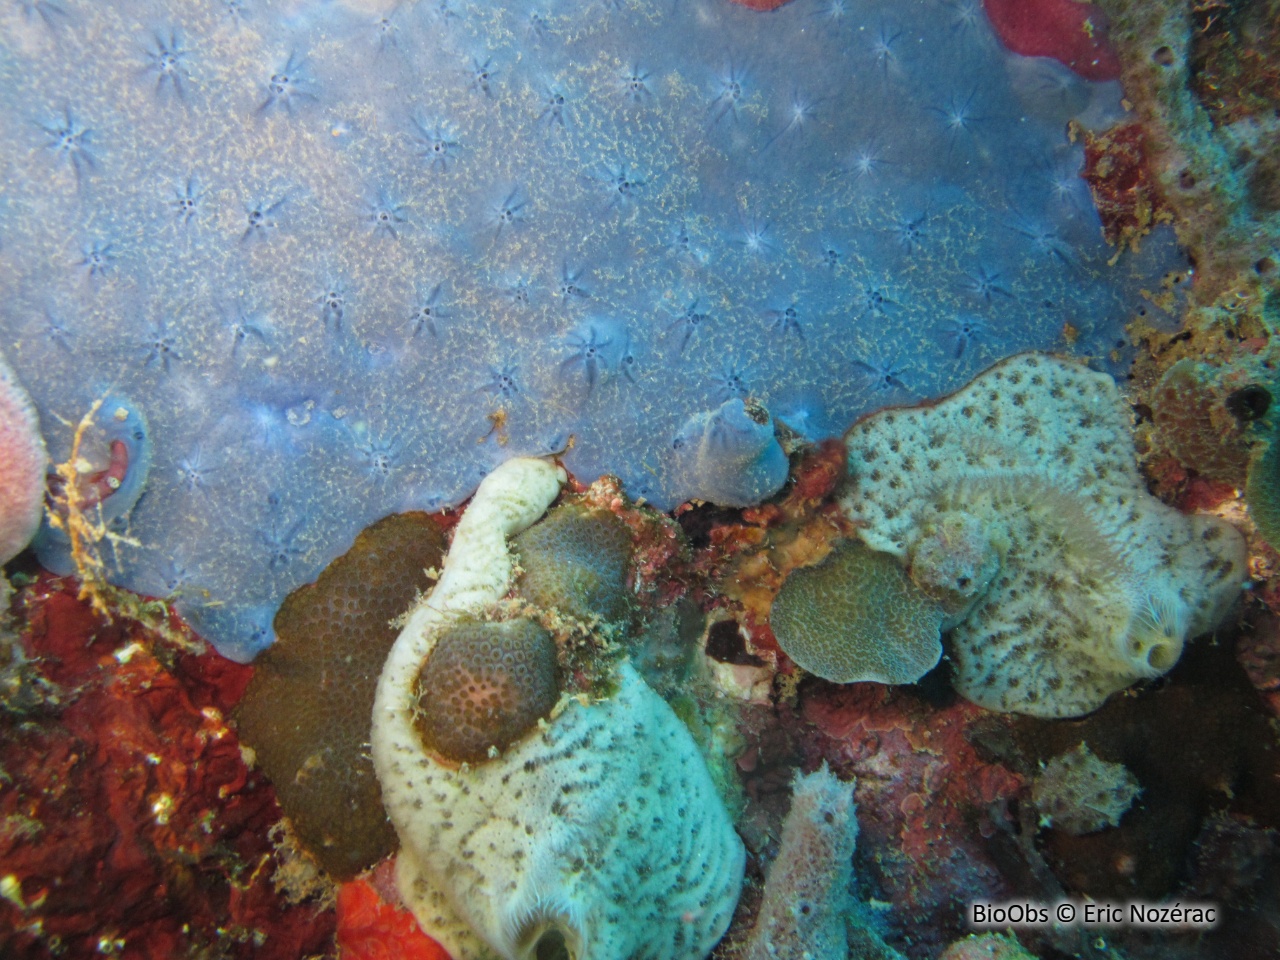 Eponge étoilée bleue - Halisarca caerulea - Eric Nozérac - BioObs